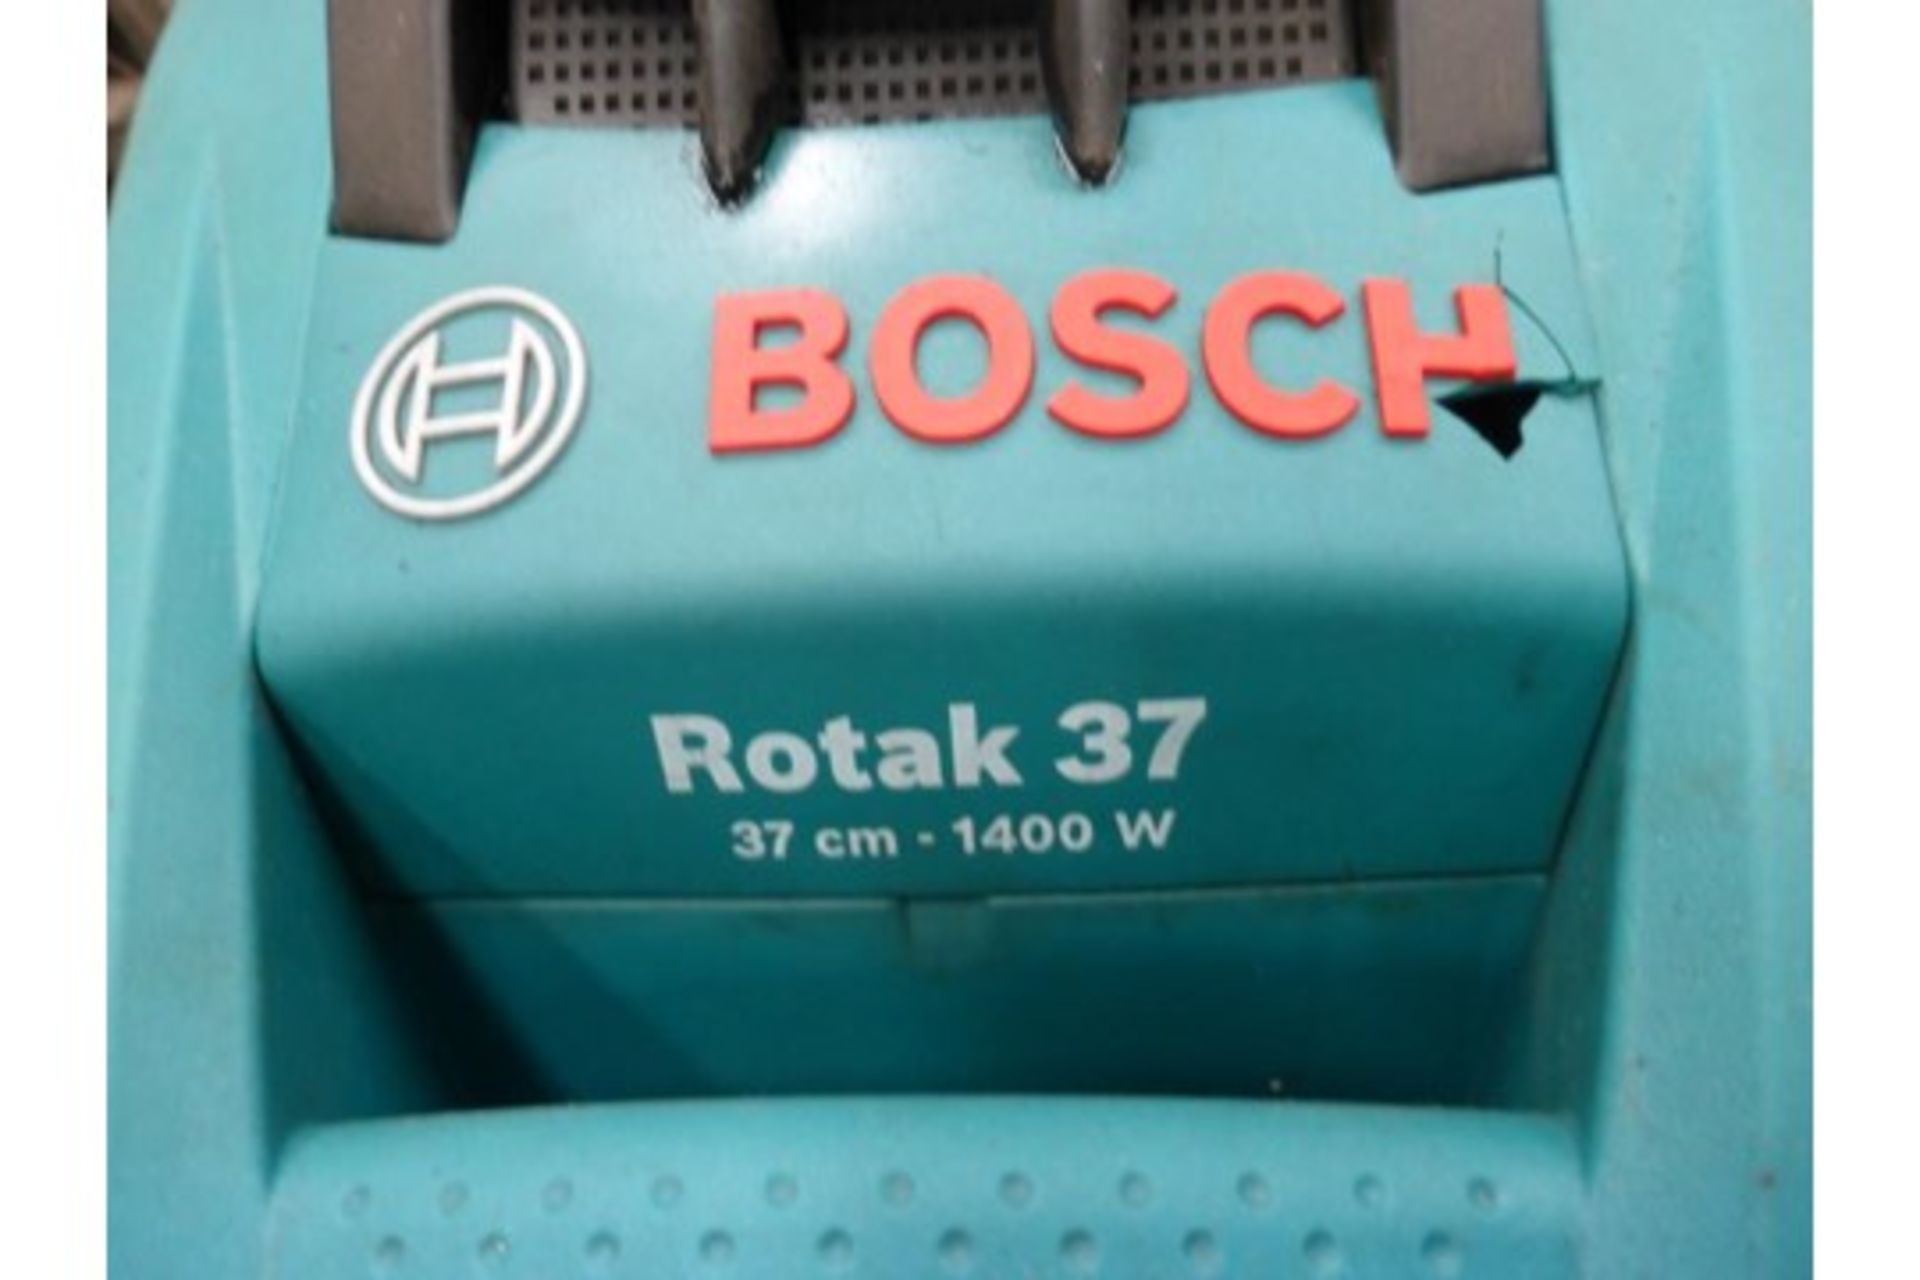 Bosch Rotak 37 Rotary Mower 16" Cut with Box - Image 2 of 3